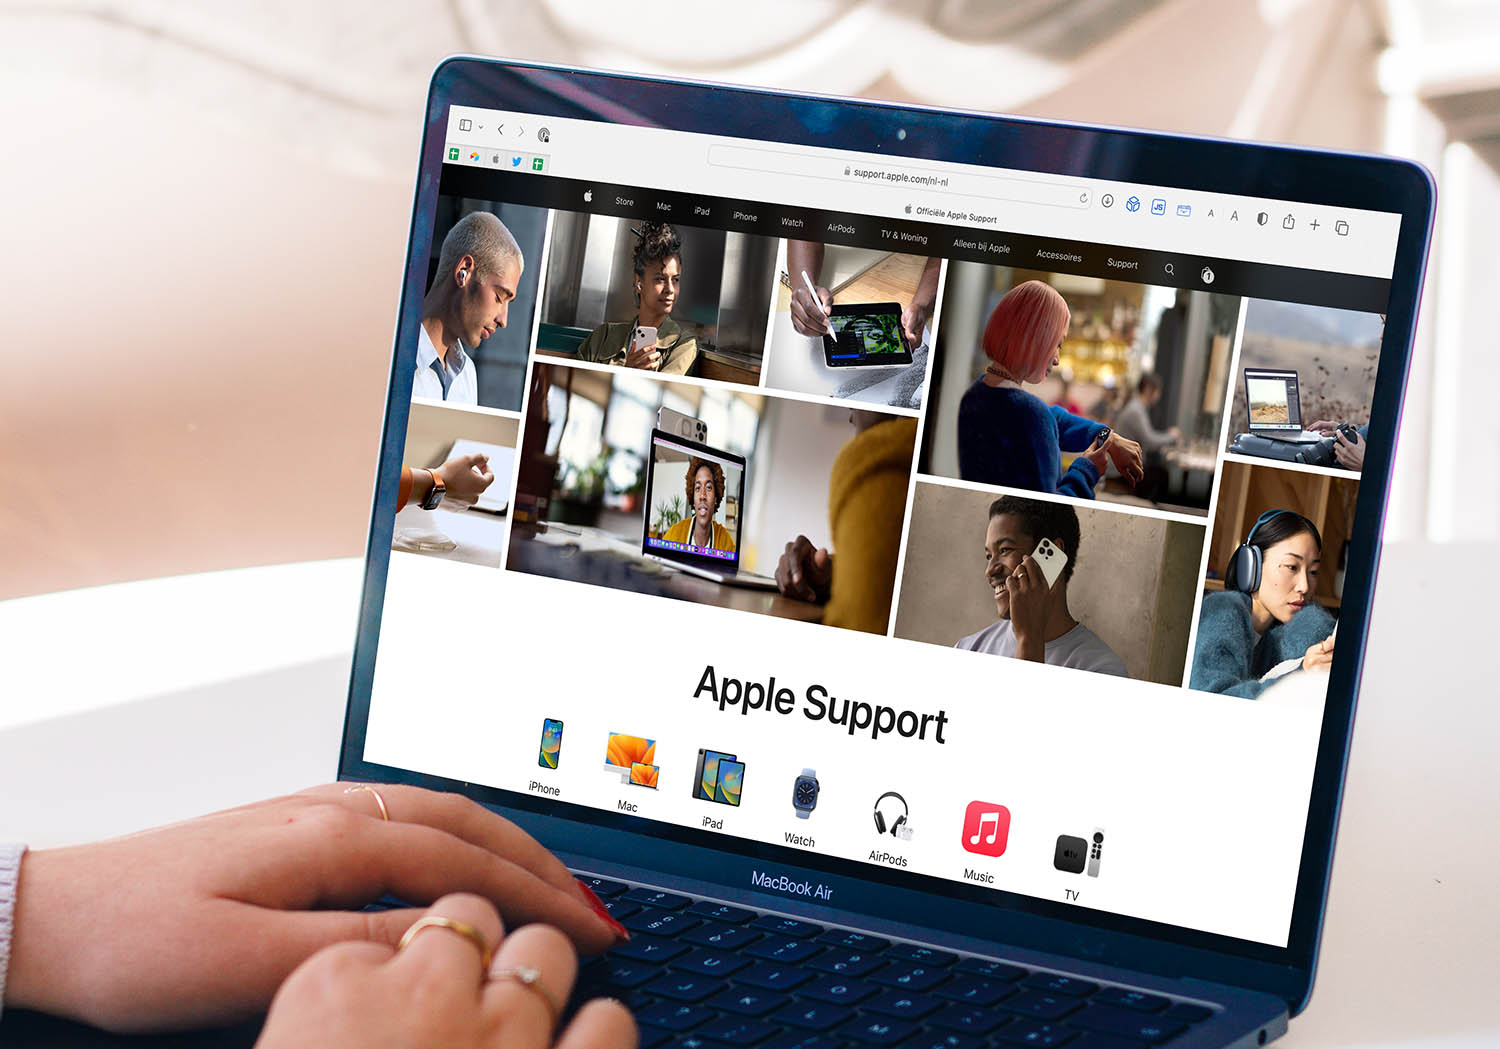 Apple Support website